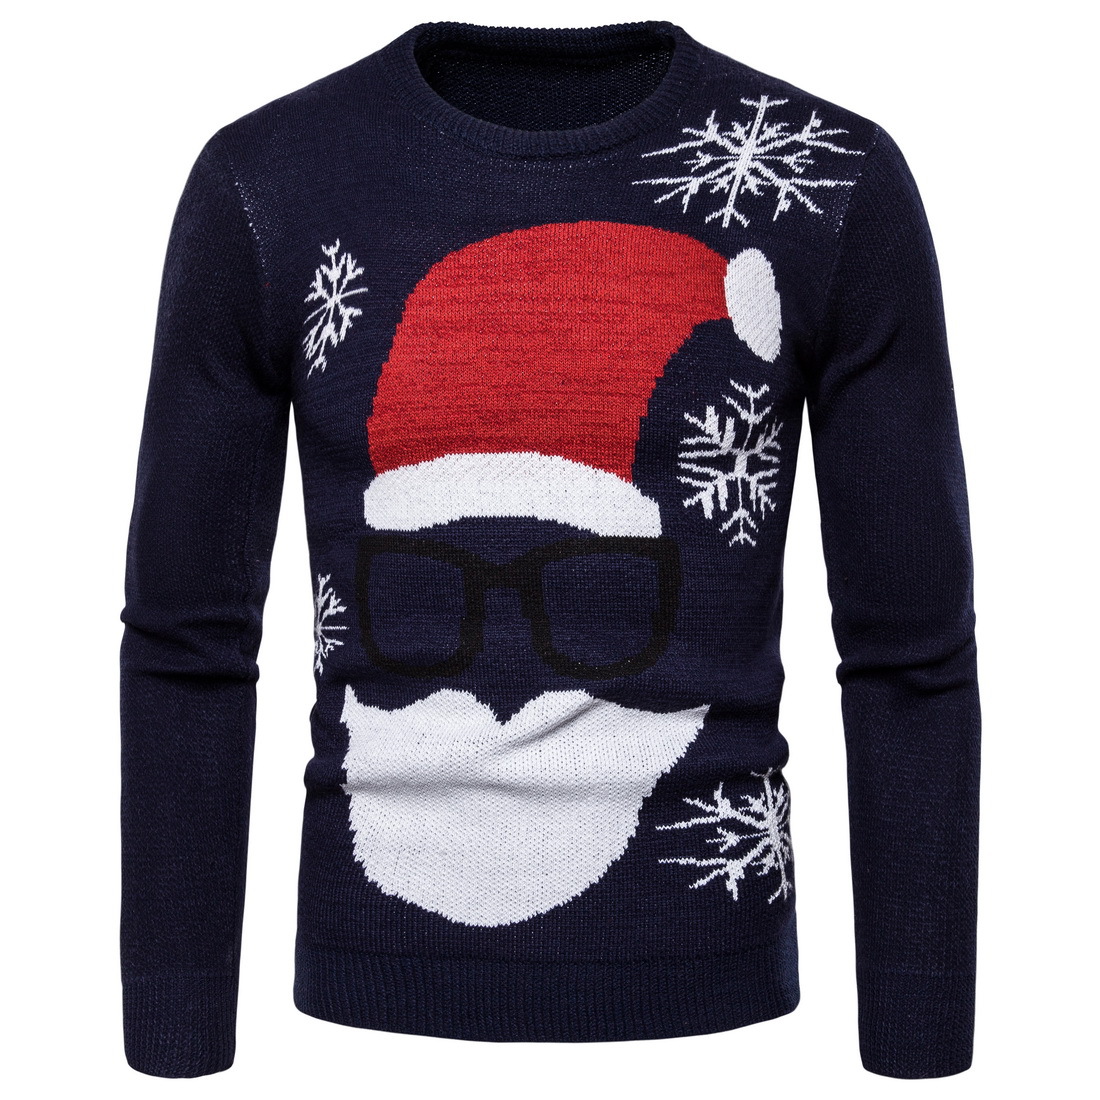  New Fashion Clothing Santa Claus Shirt Printing Knitted Bottoming Mens Sweaters navy blue